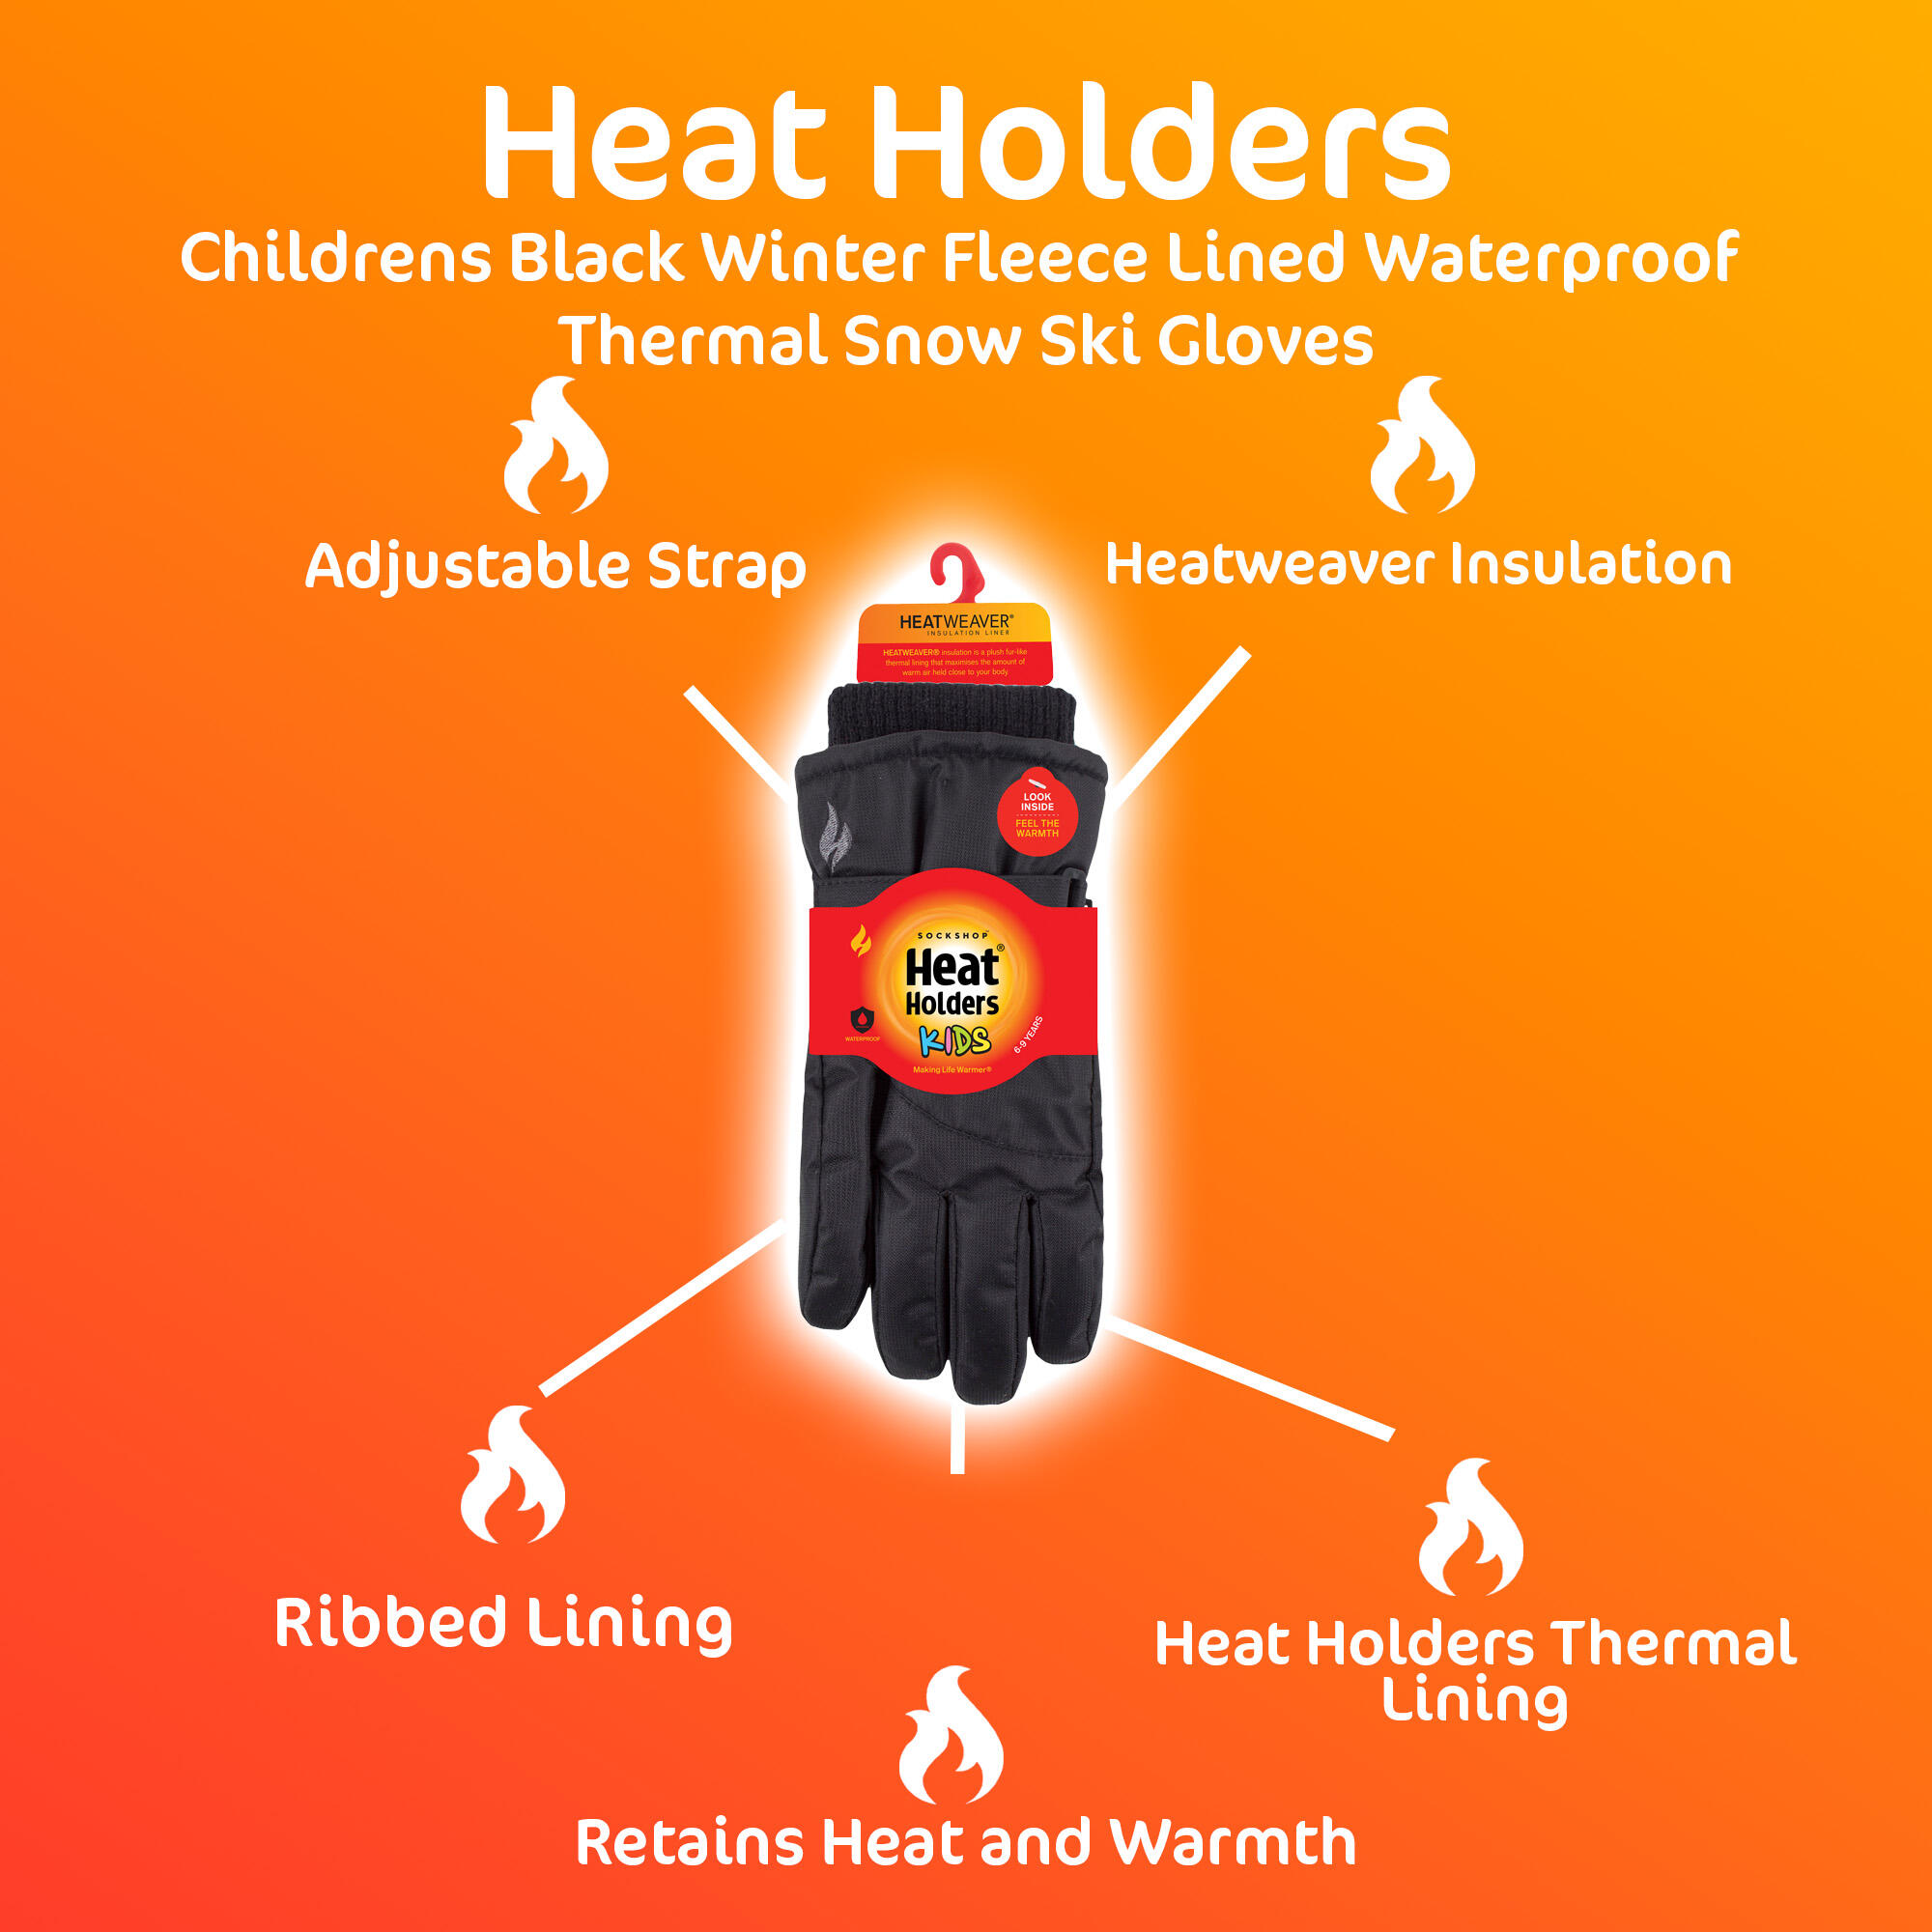 Childrens Black Winter Fleece Lined Waterproof Thermal Snow Ski Gloves 3/3